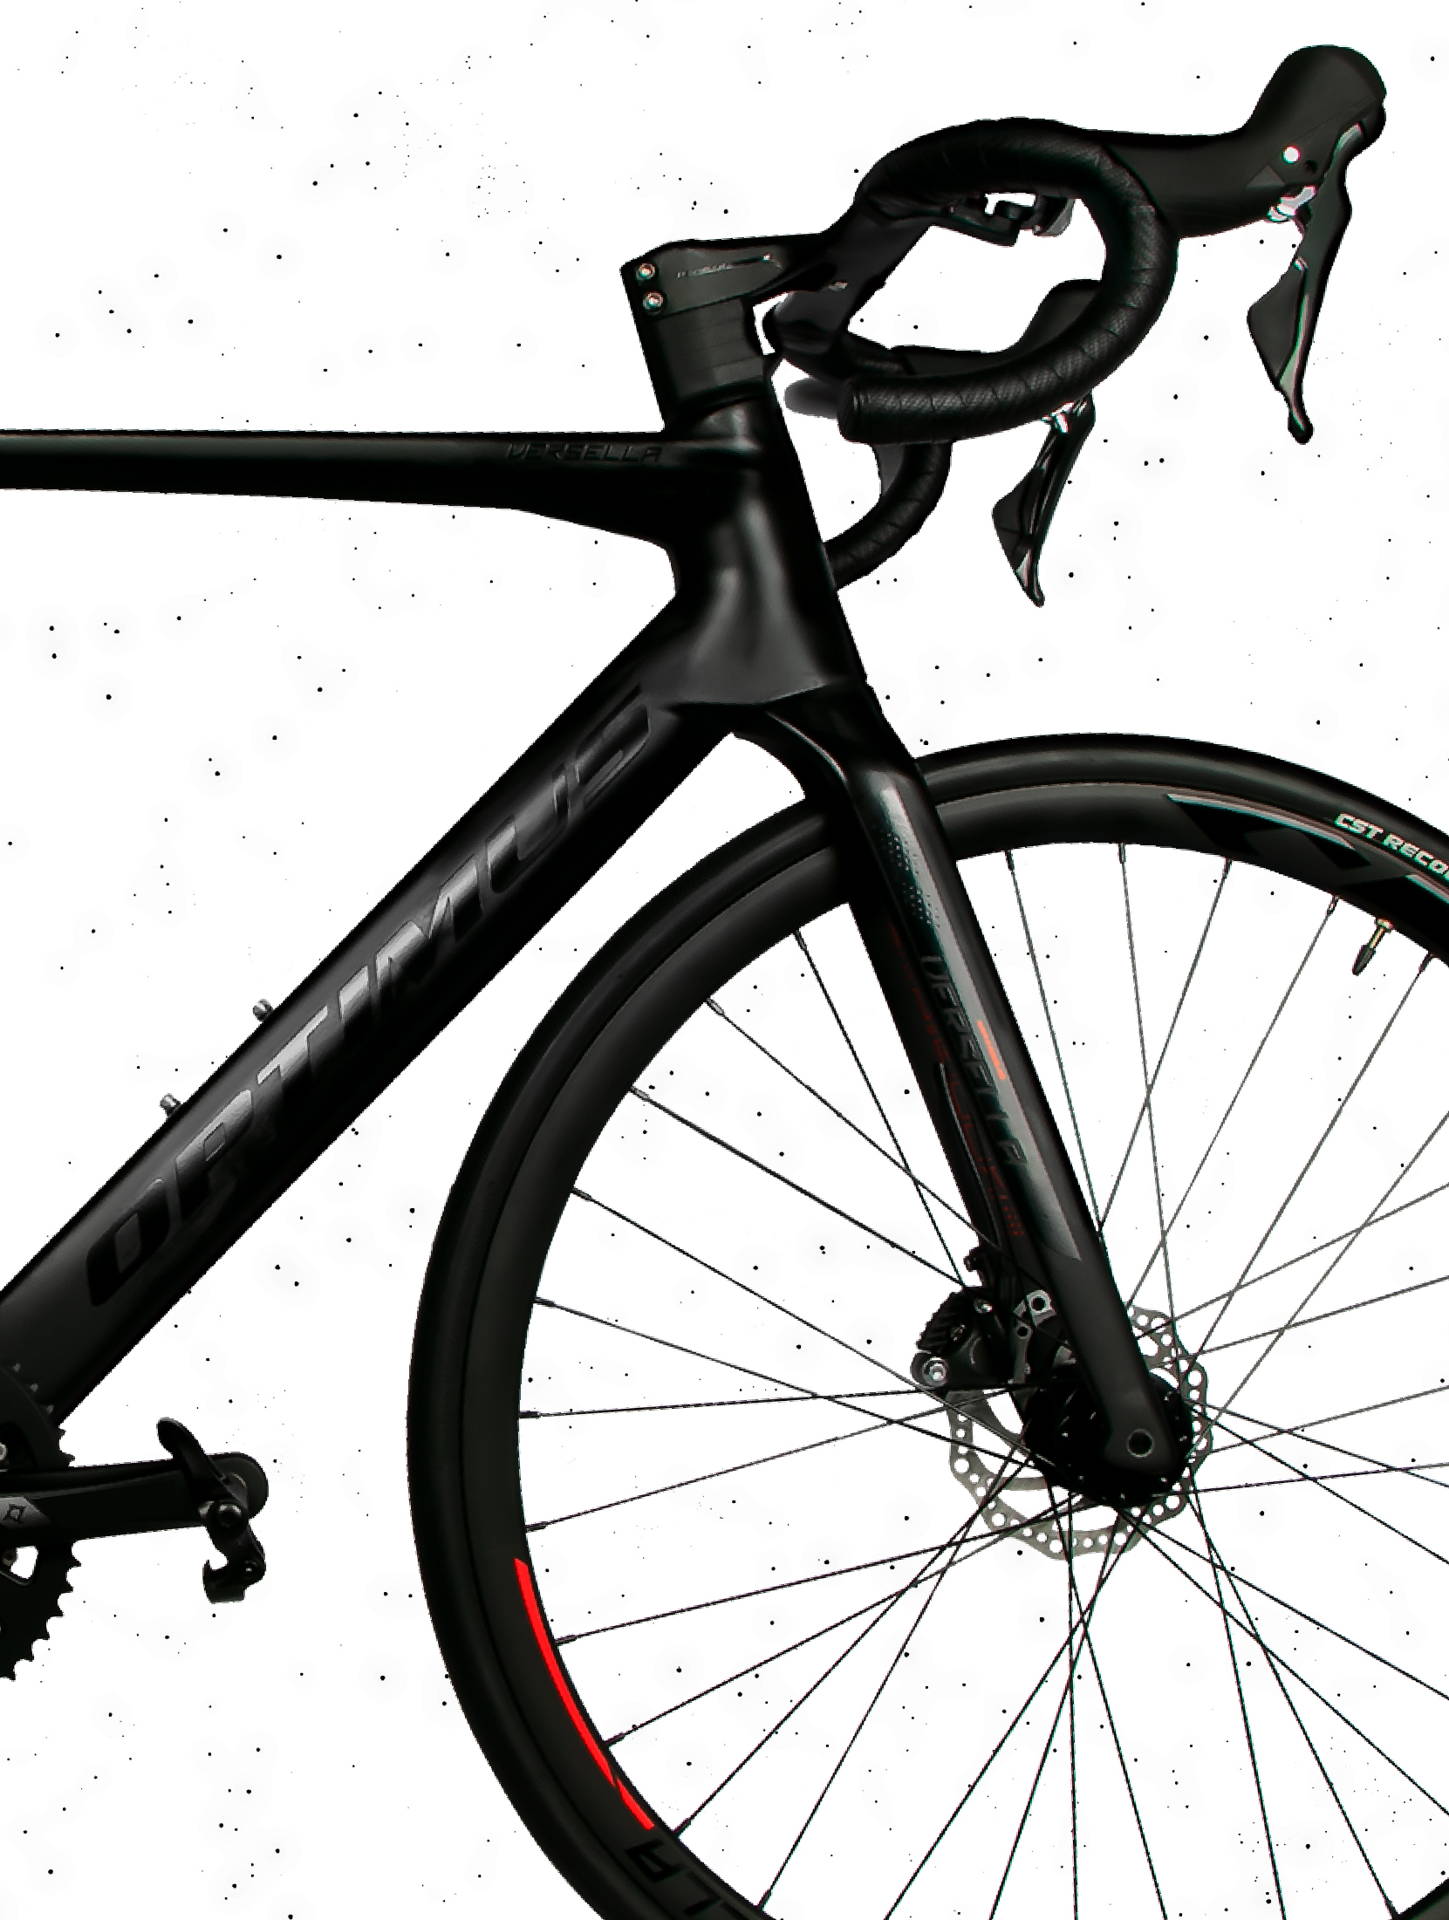 Bicicleta Tucana Pro color negro